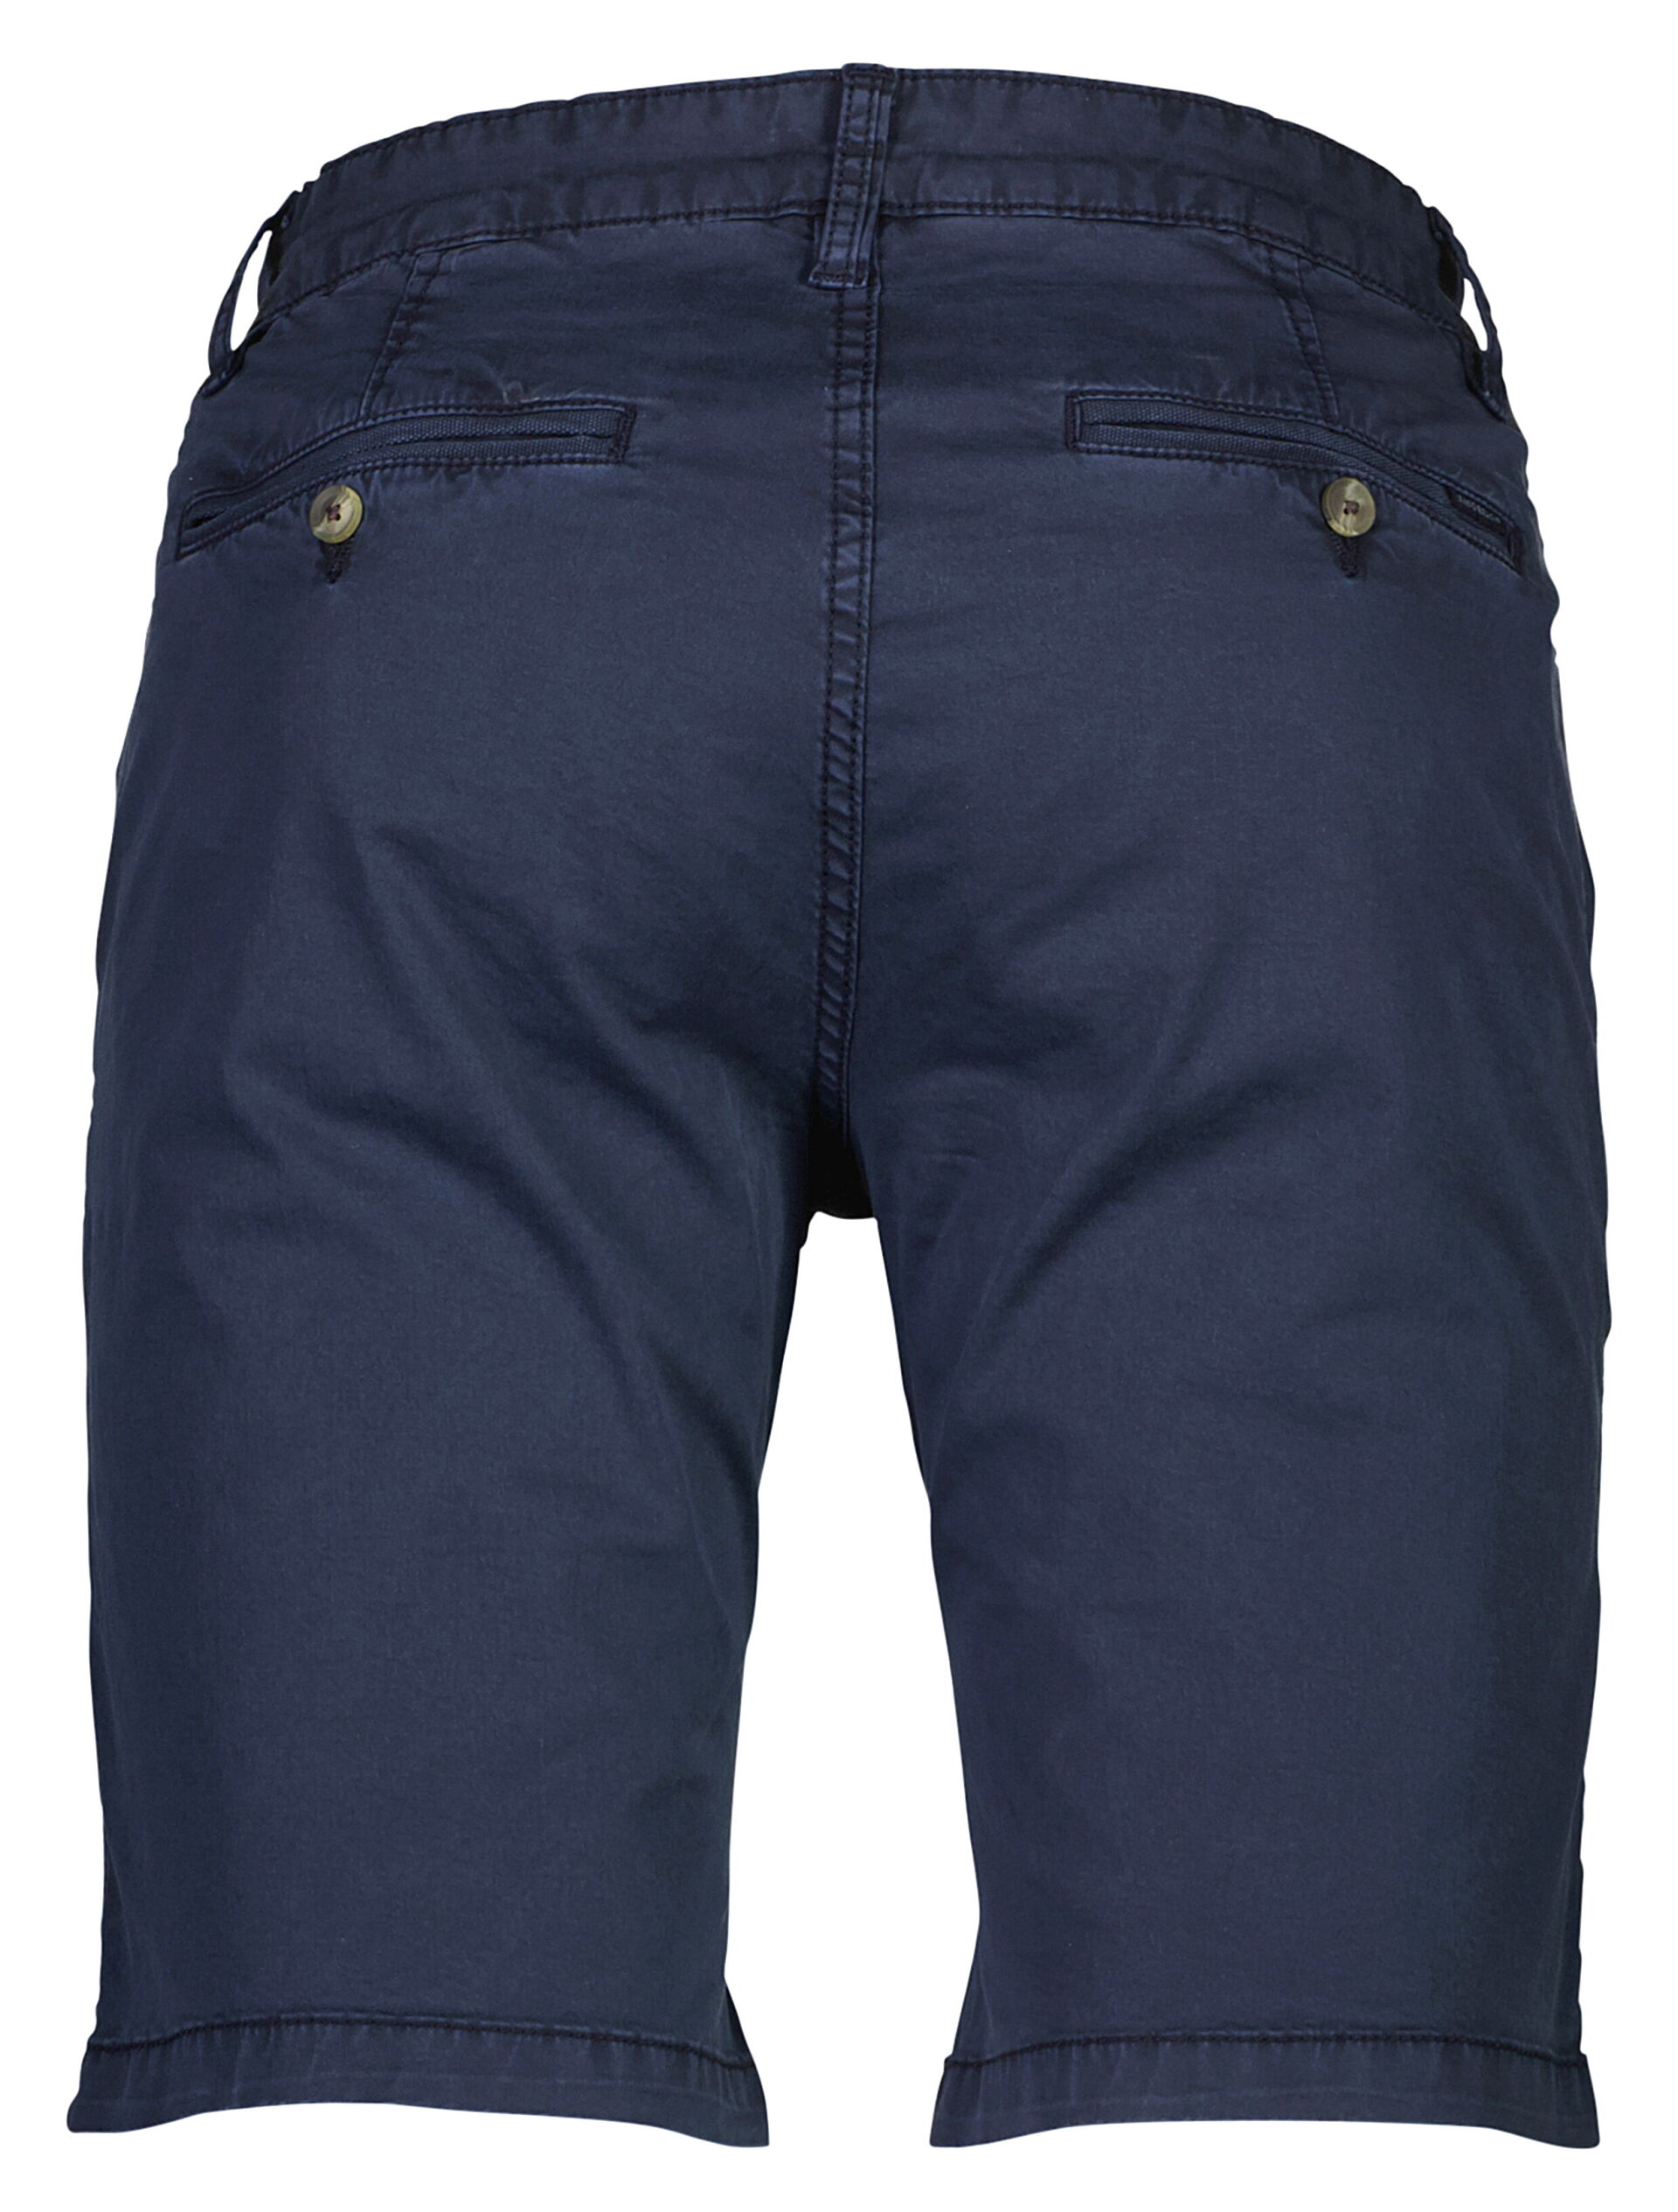 Chino shorts 30-525006